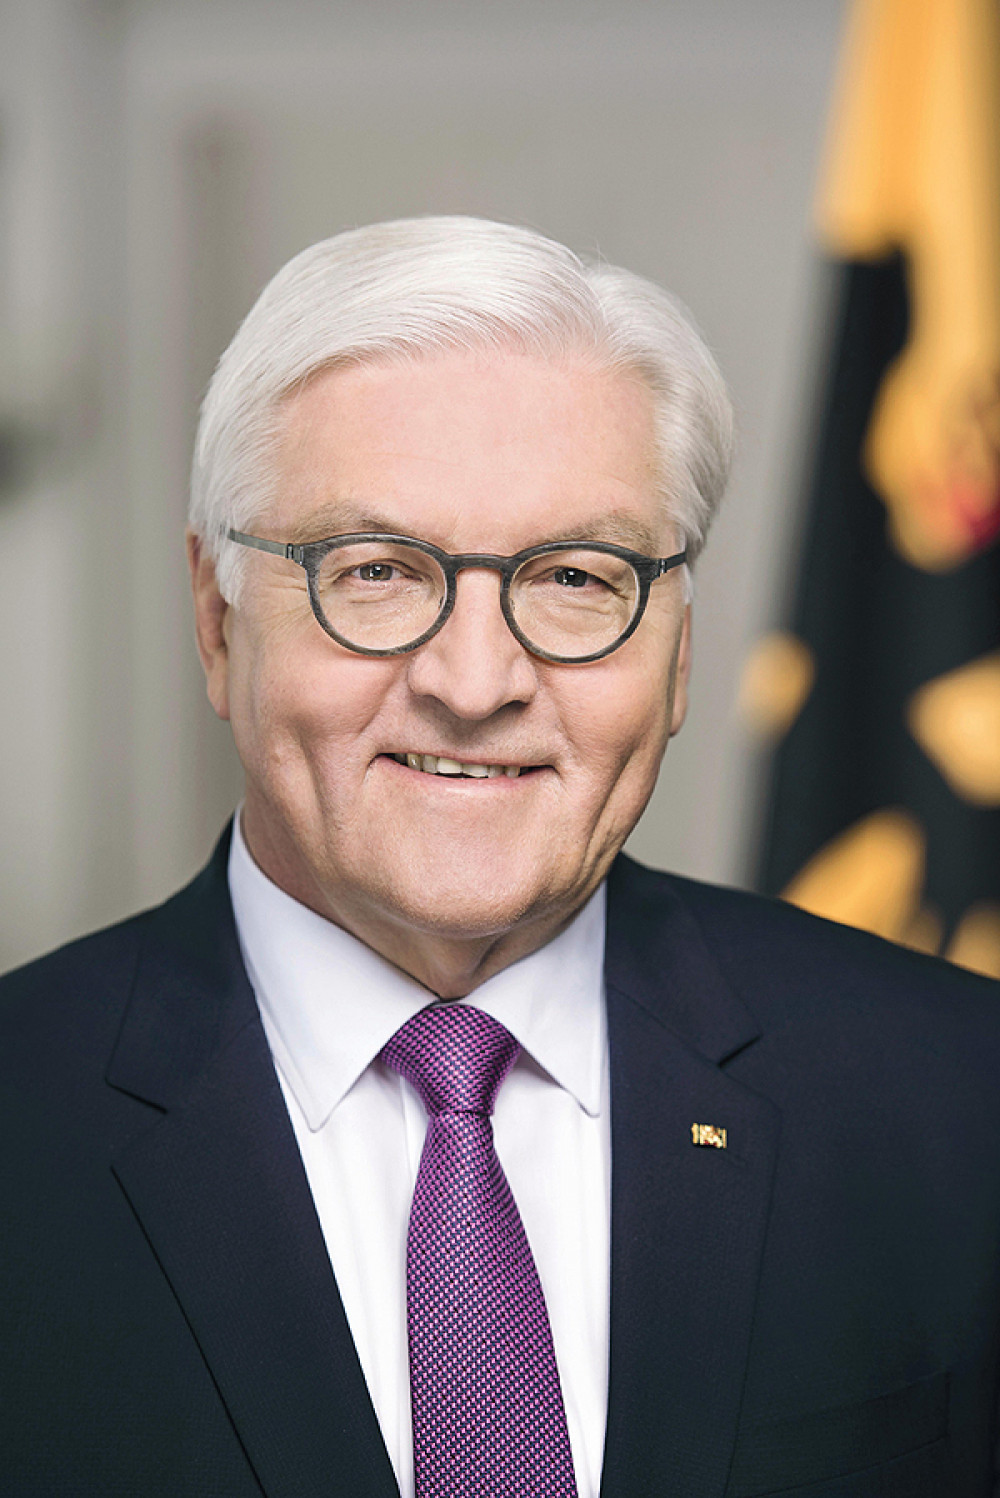 Offizielles Bild des Bundespräsidenten Frank-Walter Steinmeier